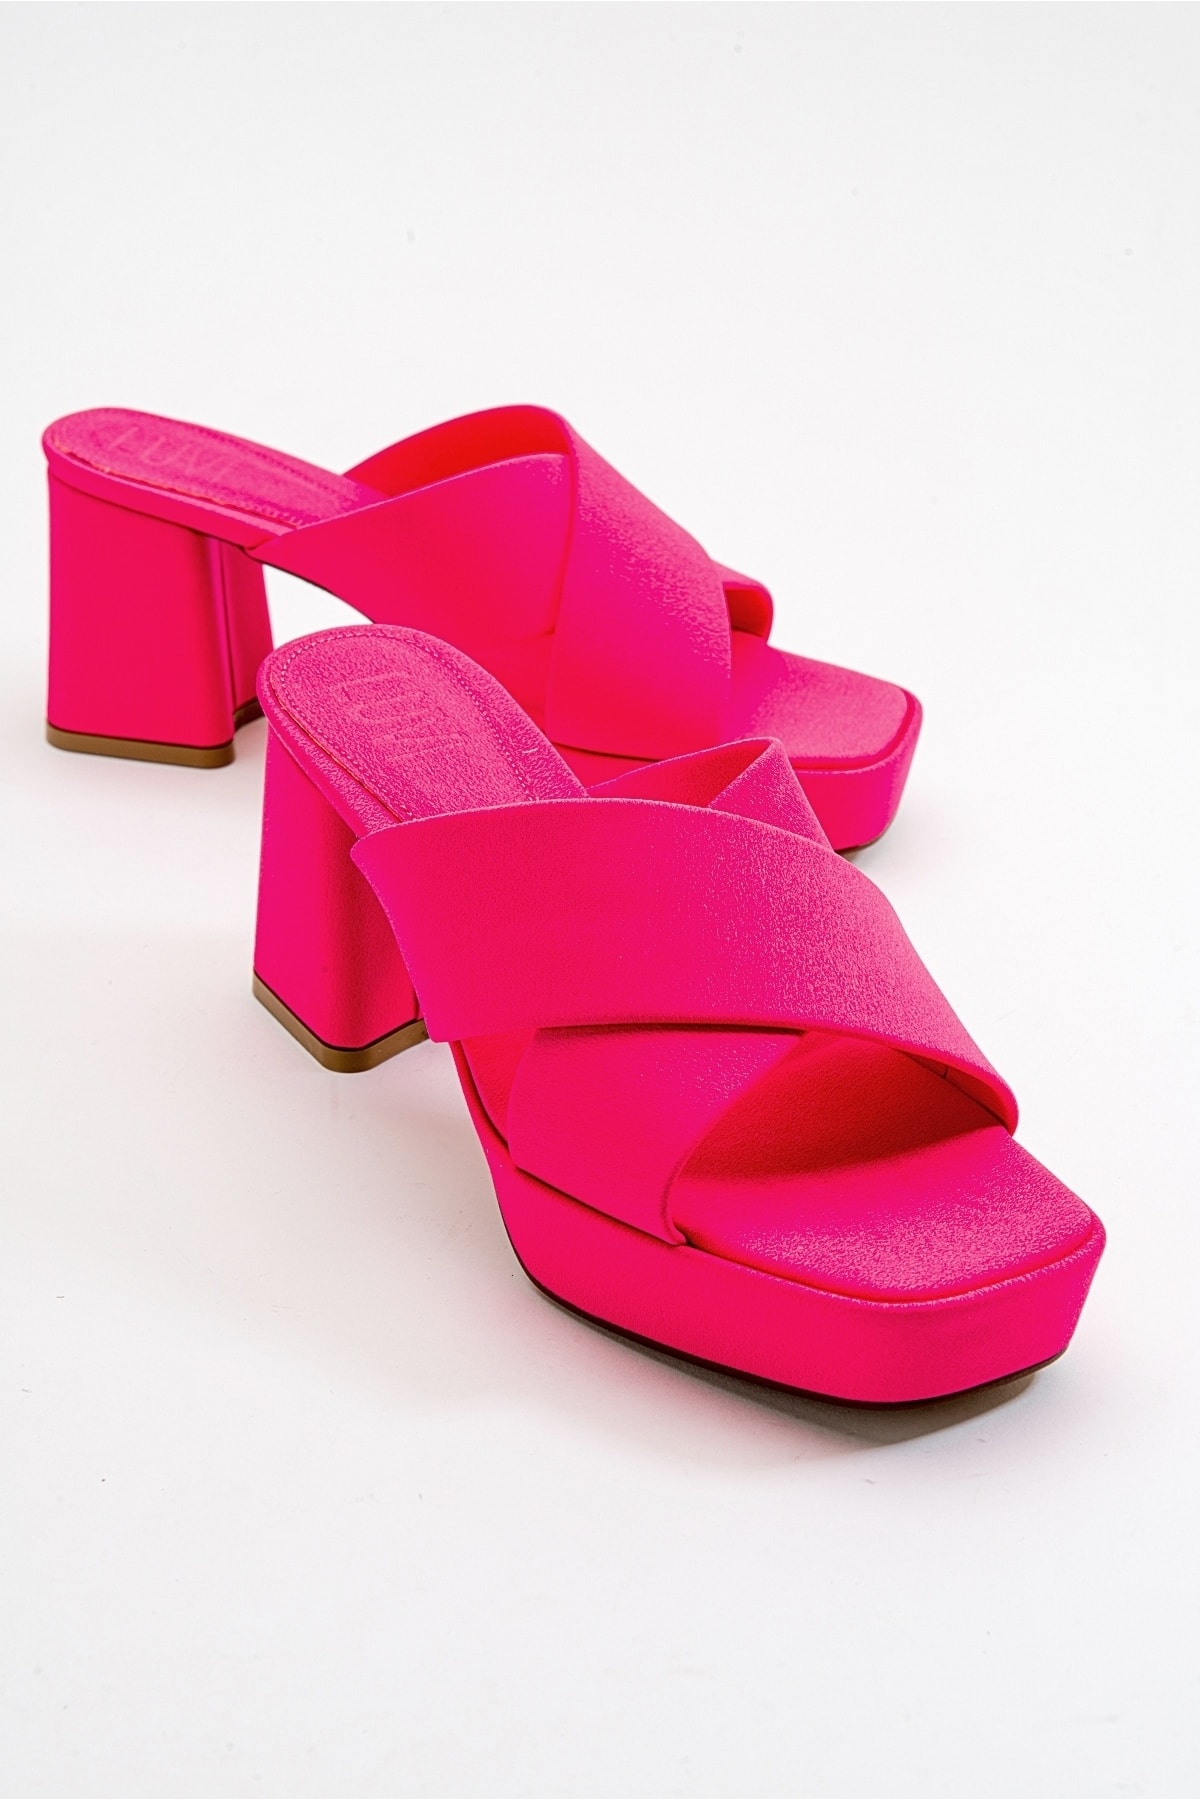 LuviShoes Lowa Fuchsia Women's Heeled Slippers